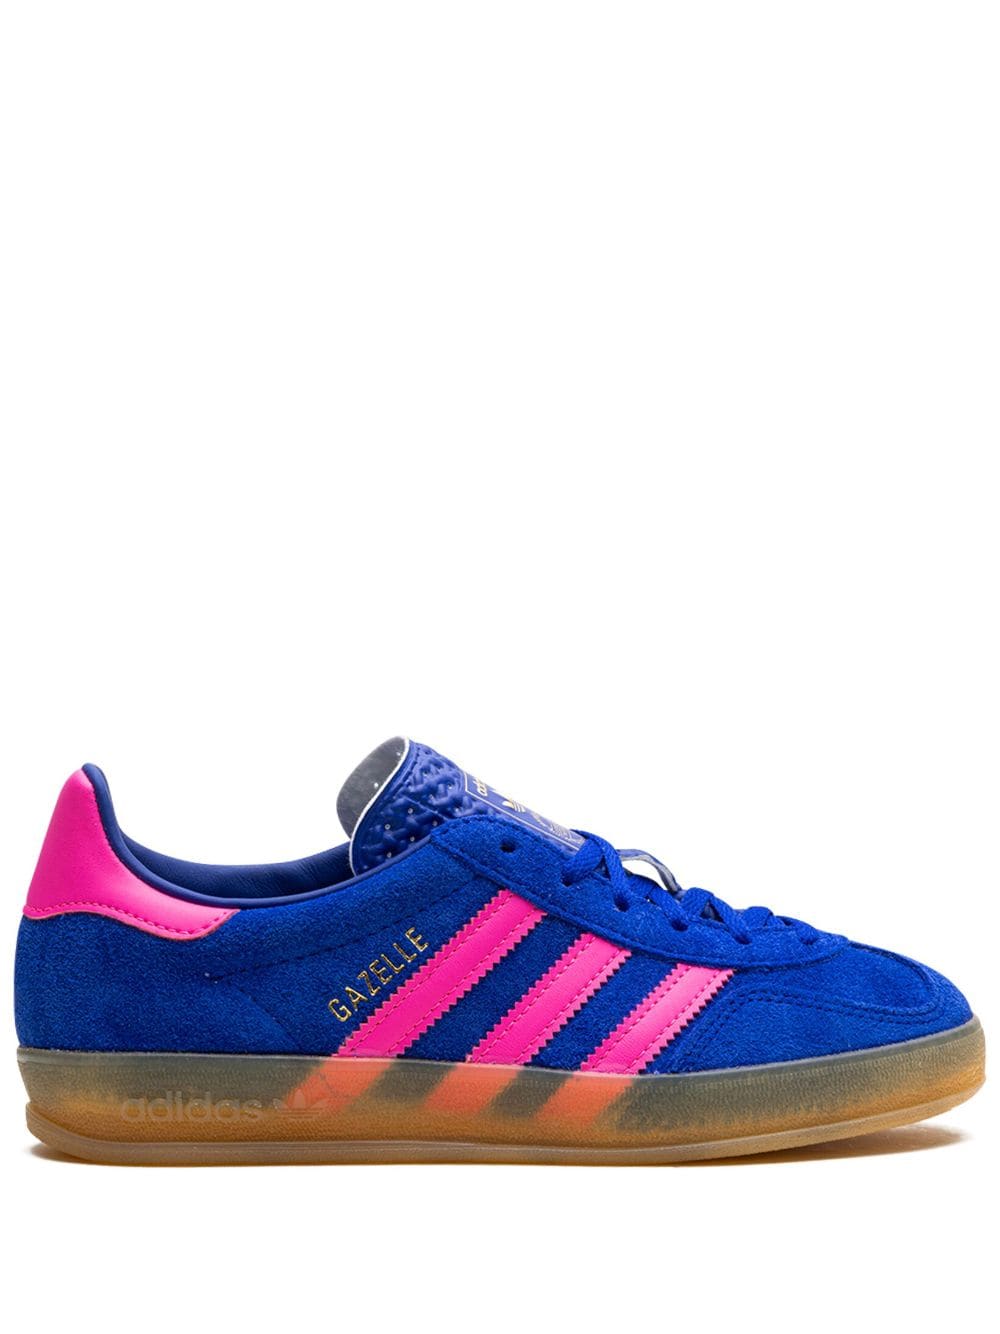 Adidas Gazelle Indoor "Blue Lucid Pink" sneakers